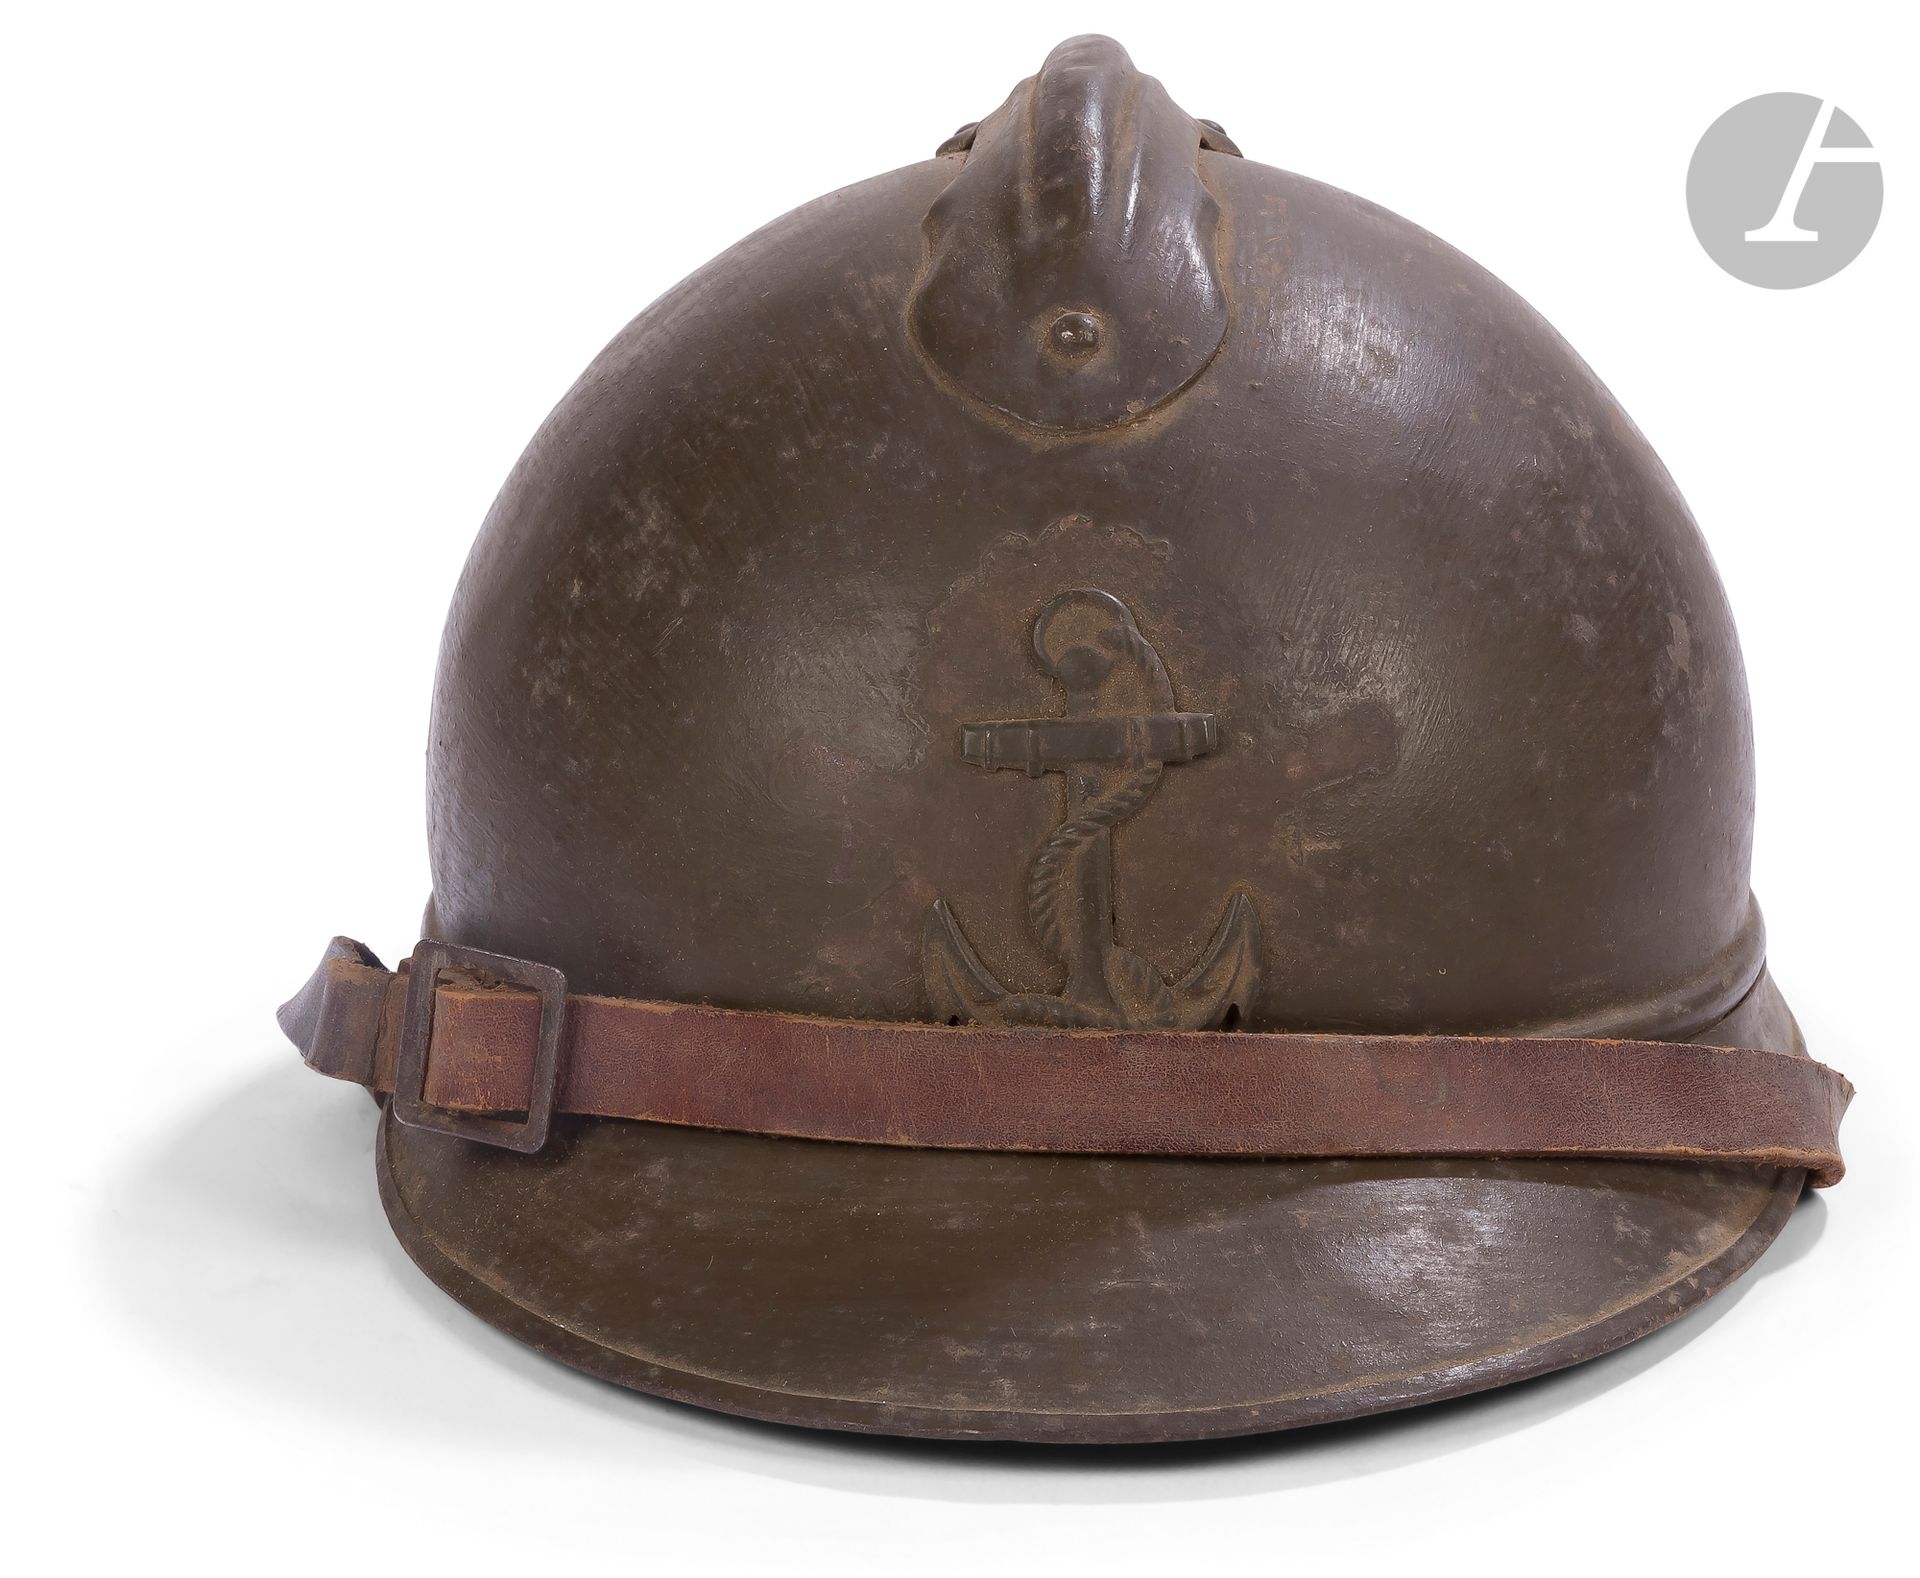 Null 阿德里安15海军陆战队步兵头盔。
漆成卡其色。配有1929型锚式头盔。
皮革下巴。
A.B.E.